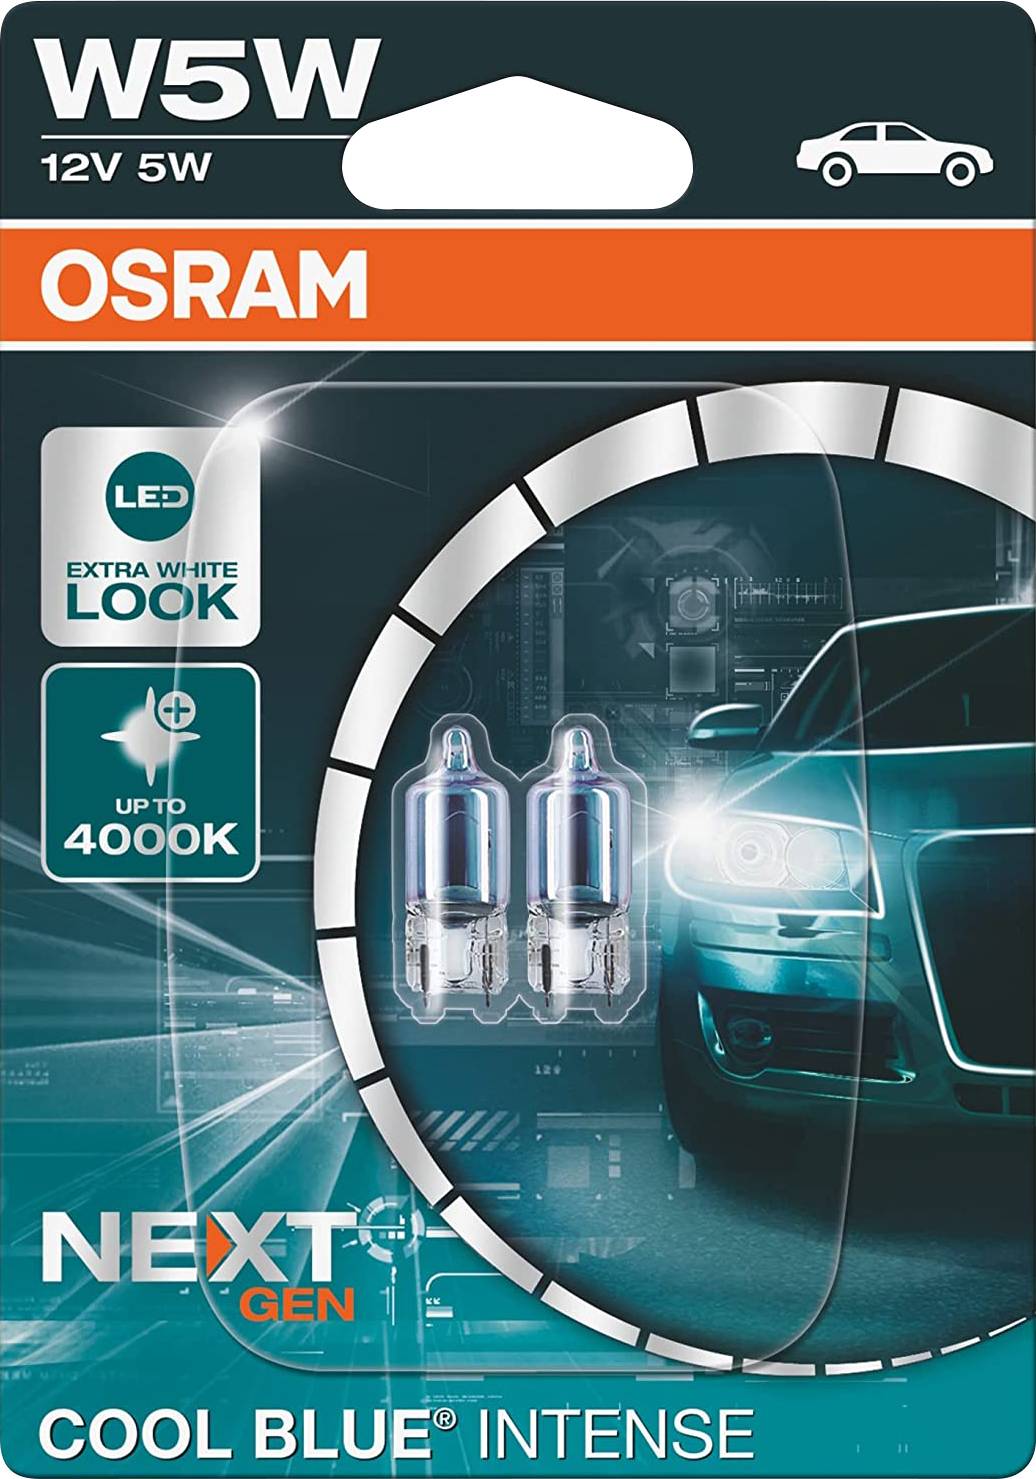 Nat sted Isolere pris OSRAM 2825CBN-02B Signal lyskilde COOL BLUE® INTENSE W5W 5 W 12 V købe